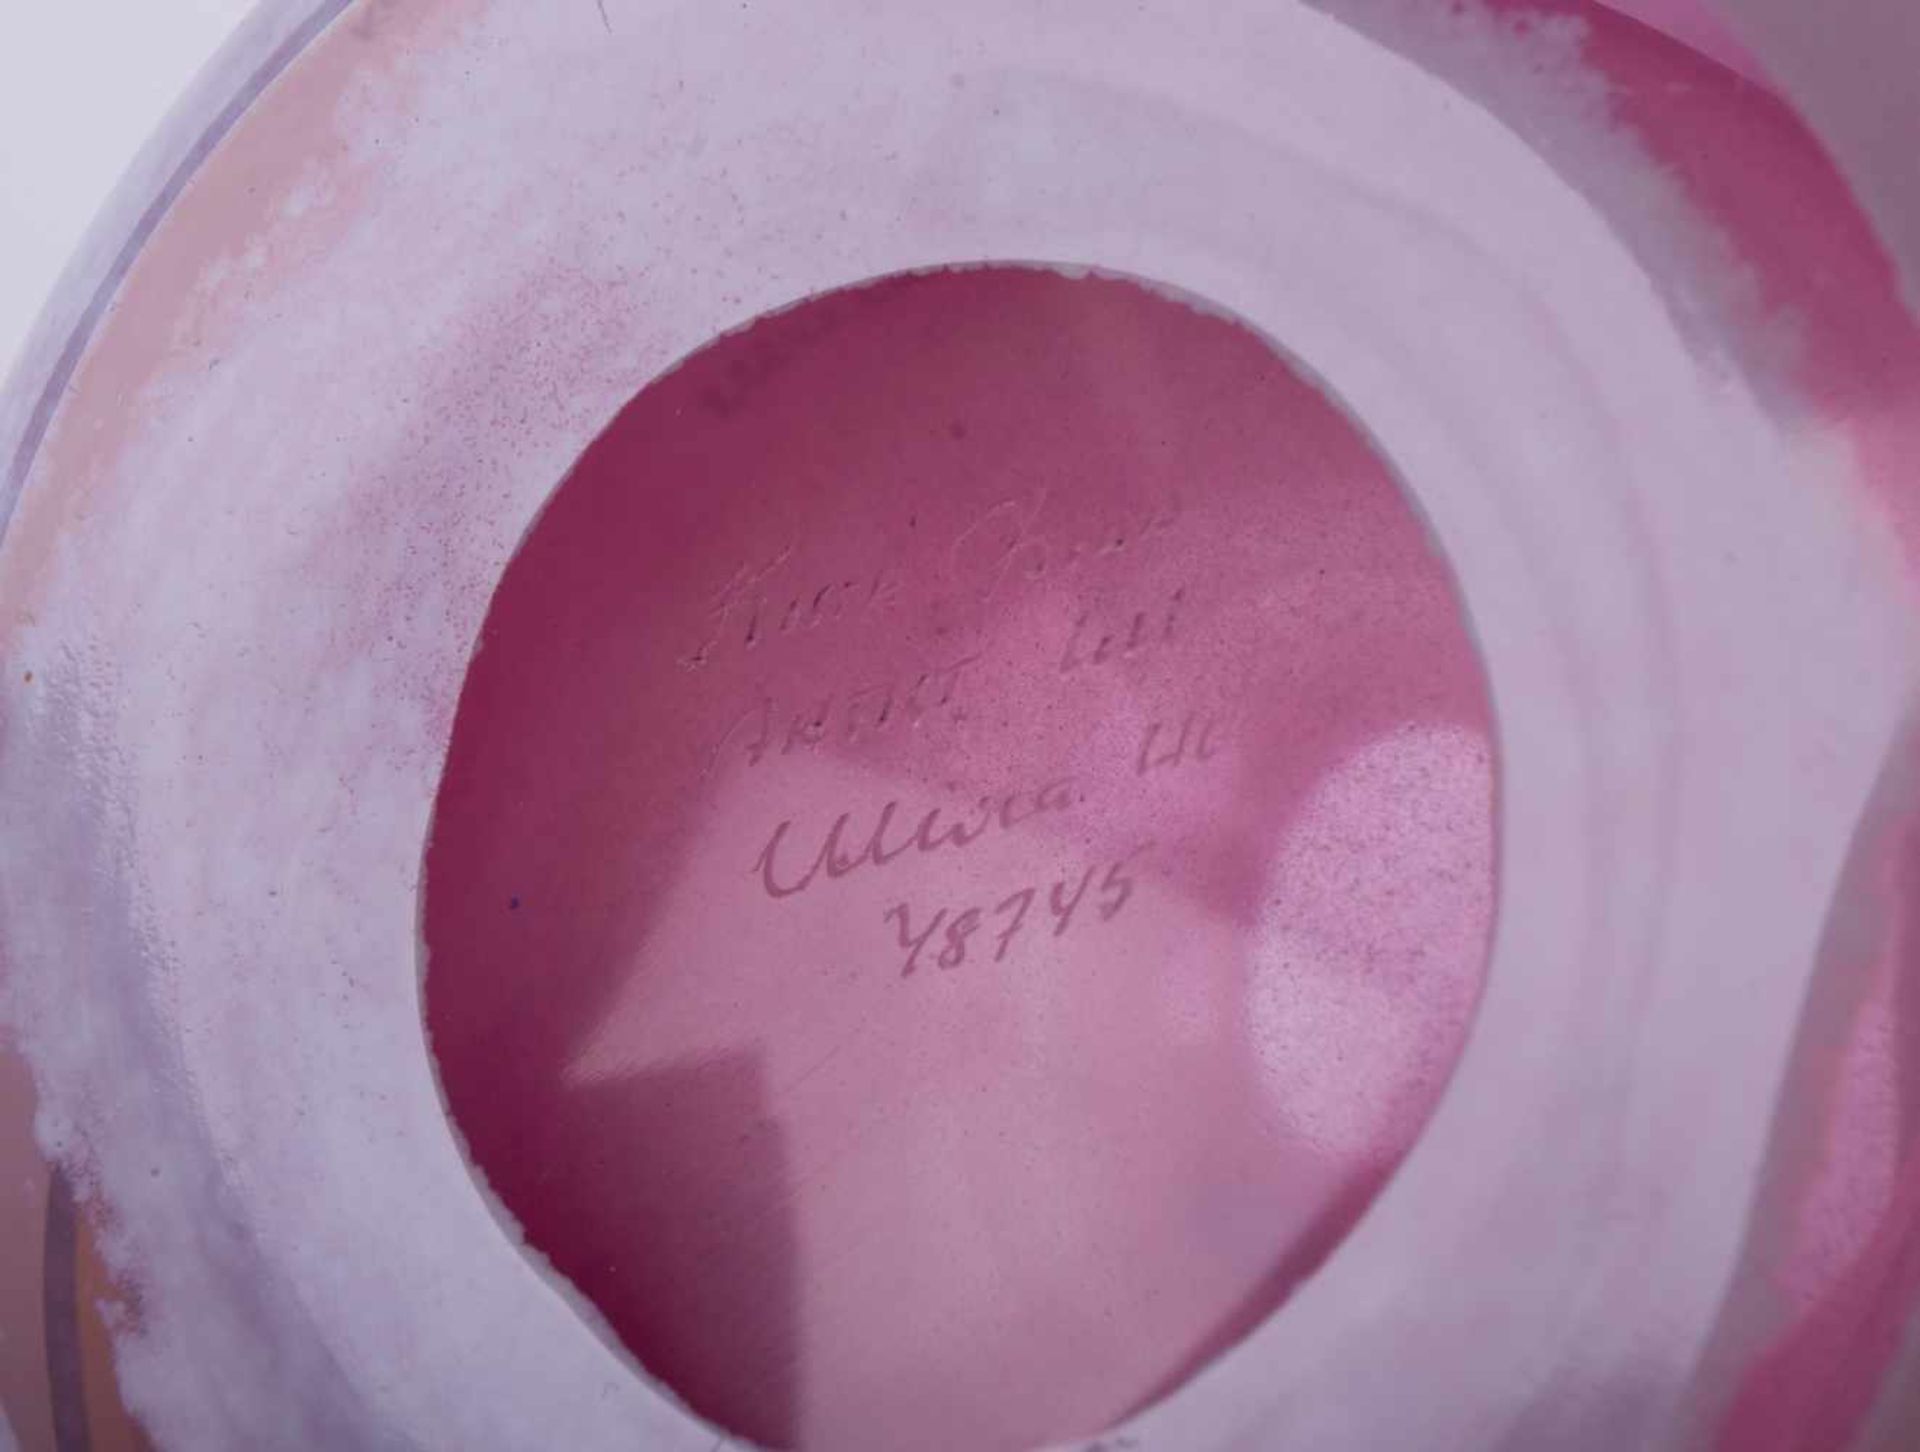 Kosta Boda OPEN MINDS Vase Ulrica Hydman-Vallien rosa, farbig staffiert, signiert, H: 36 cm, Kosta - Image 5 of 5